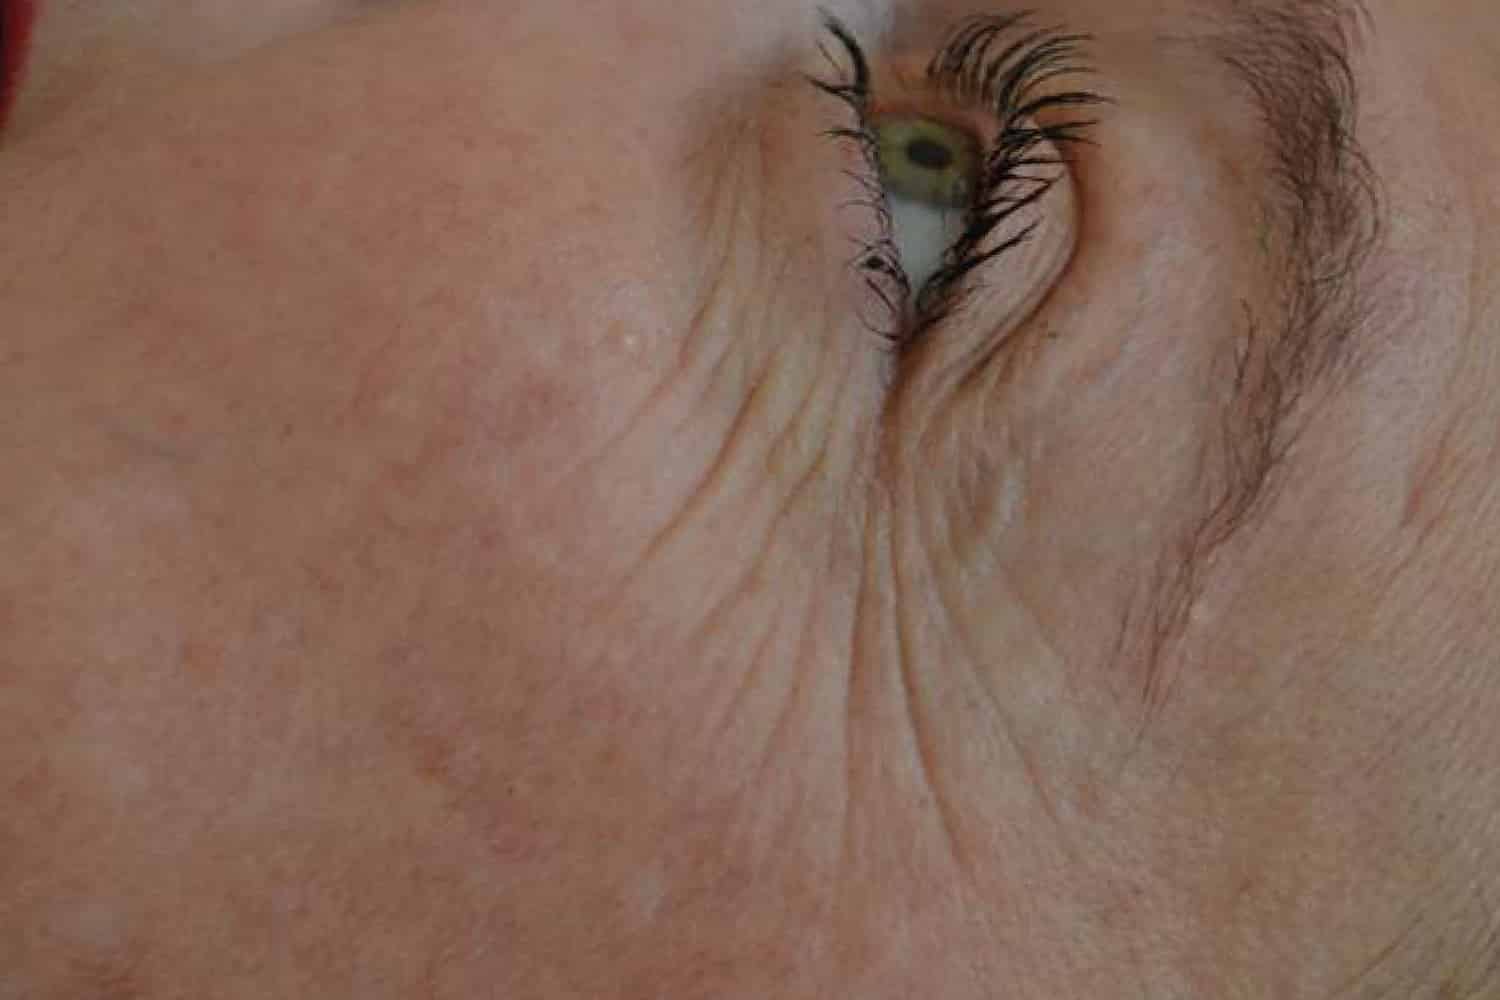 Close up eye wrinkles before Exilis Ultra treatment